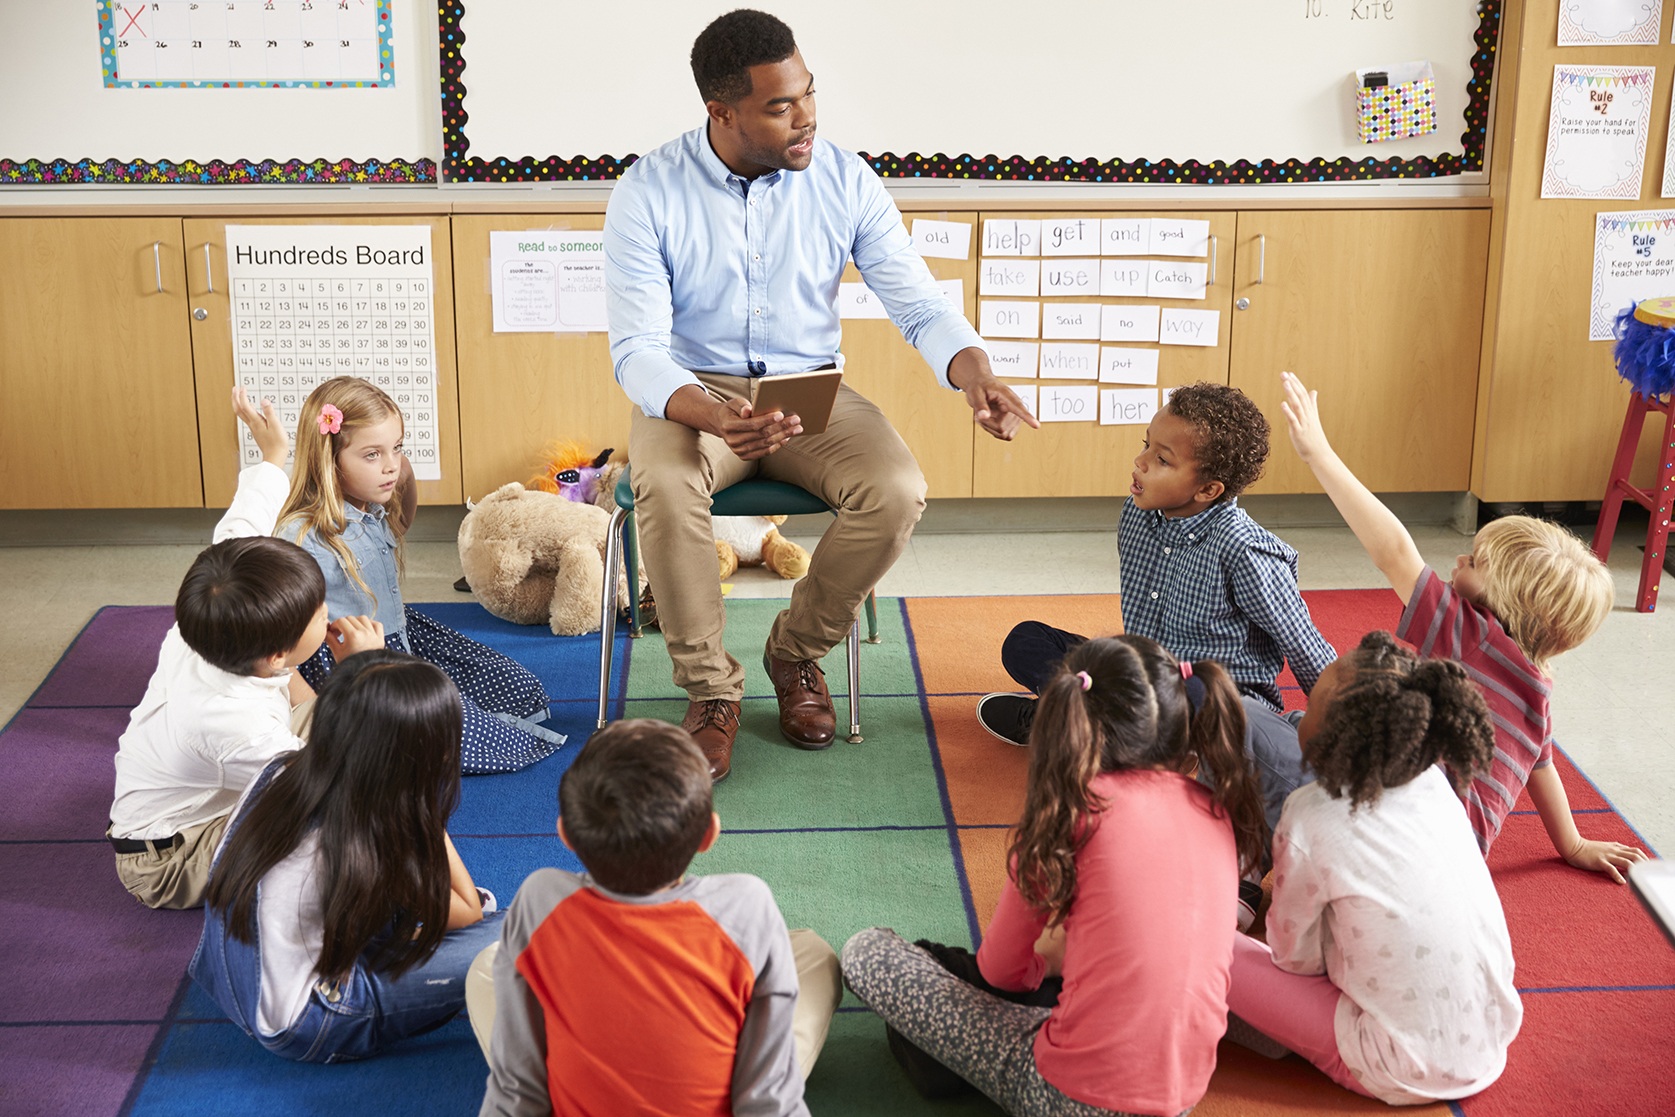 Adult black male teaching kids sitting at his feet